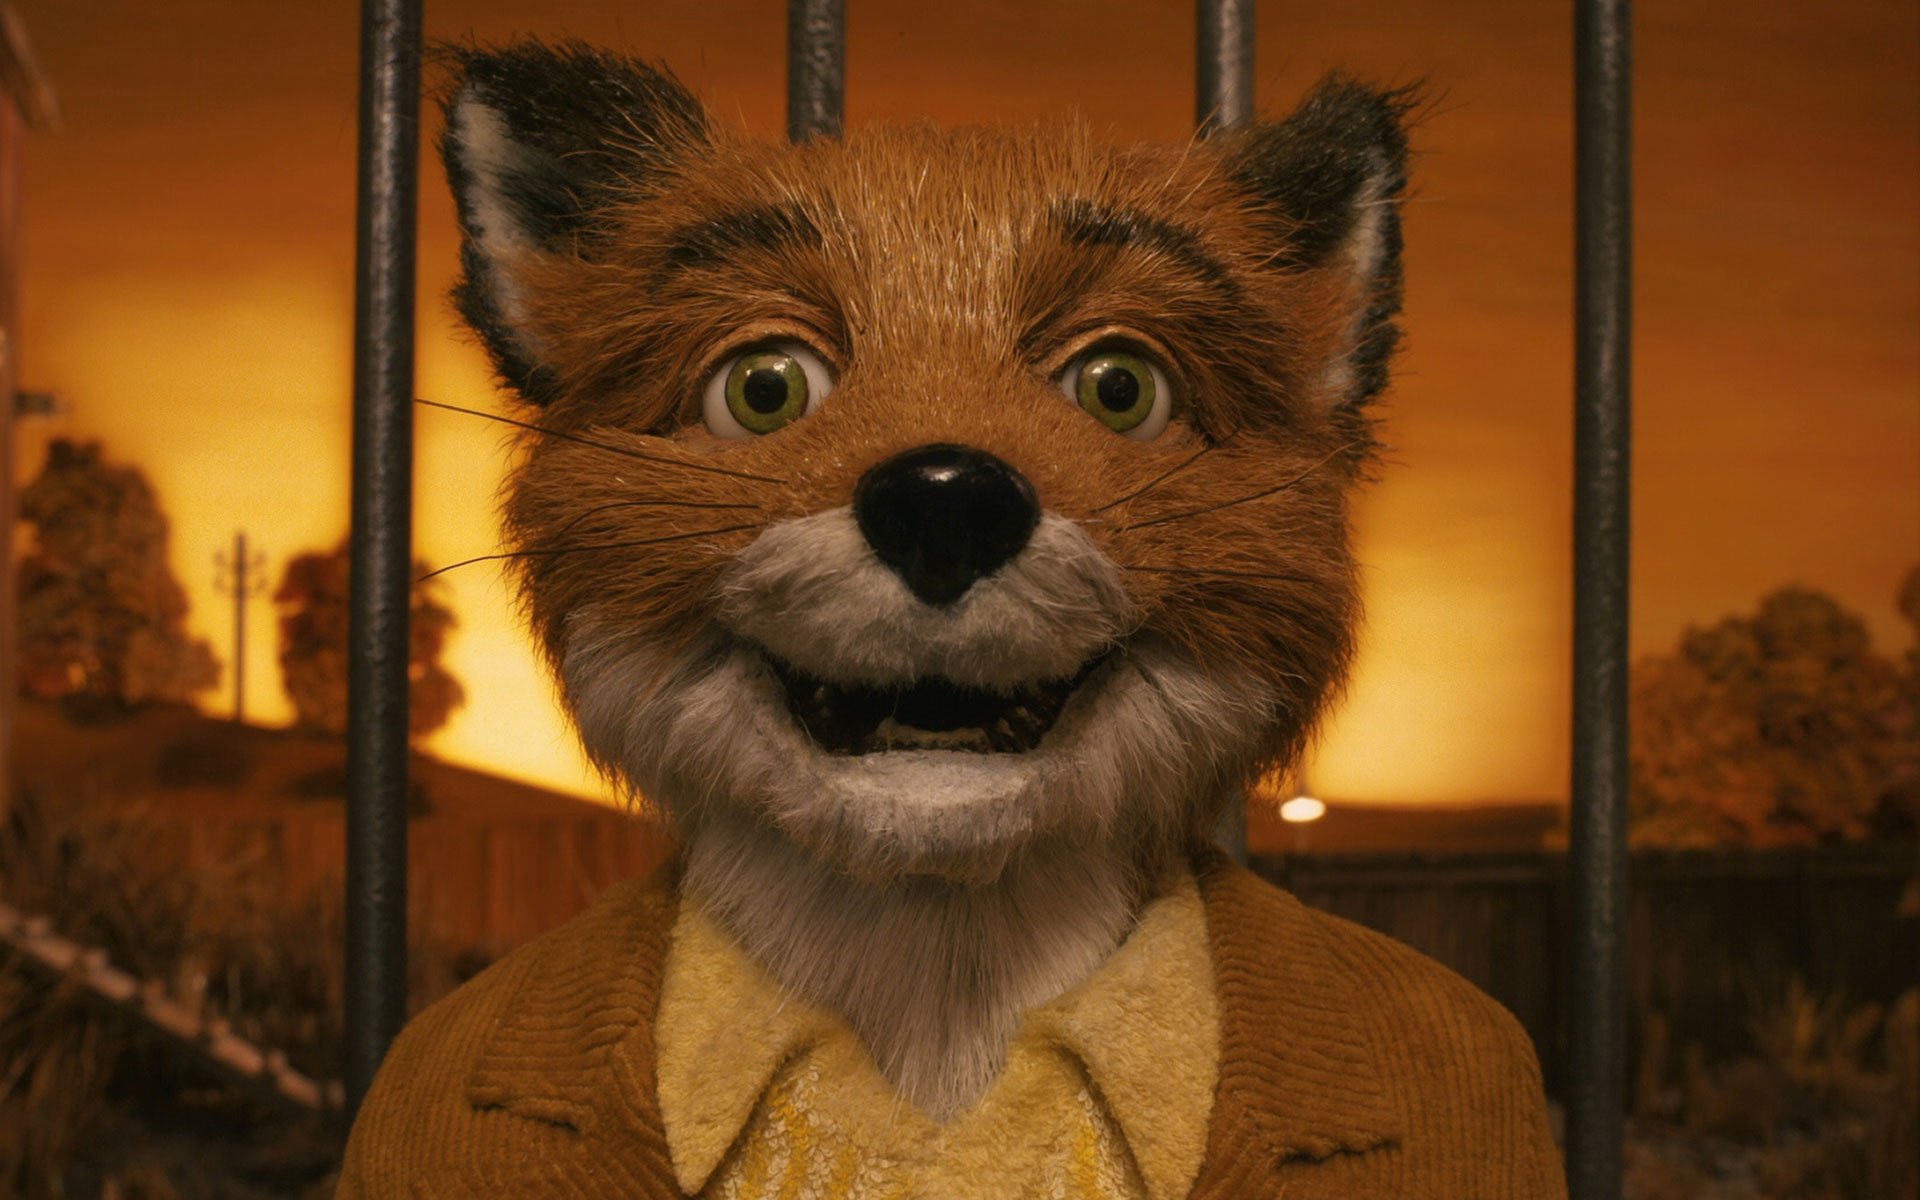 Fox см. Бесподобный Мистер Фокс. Бесподобный Мистер Фокс (fantastic Mr. Fox), 2009. Уэс Андерсон бесподобный Мистер Фокс. Бесподобный Мистер ФОК.